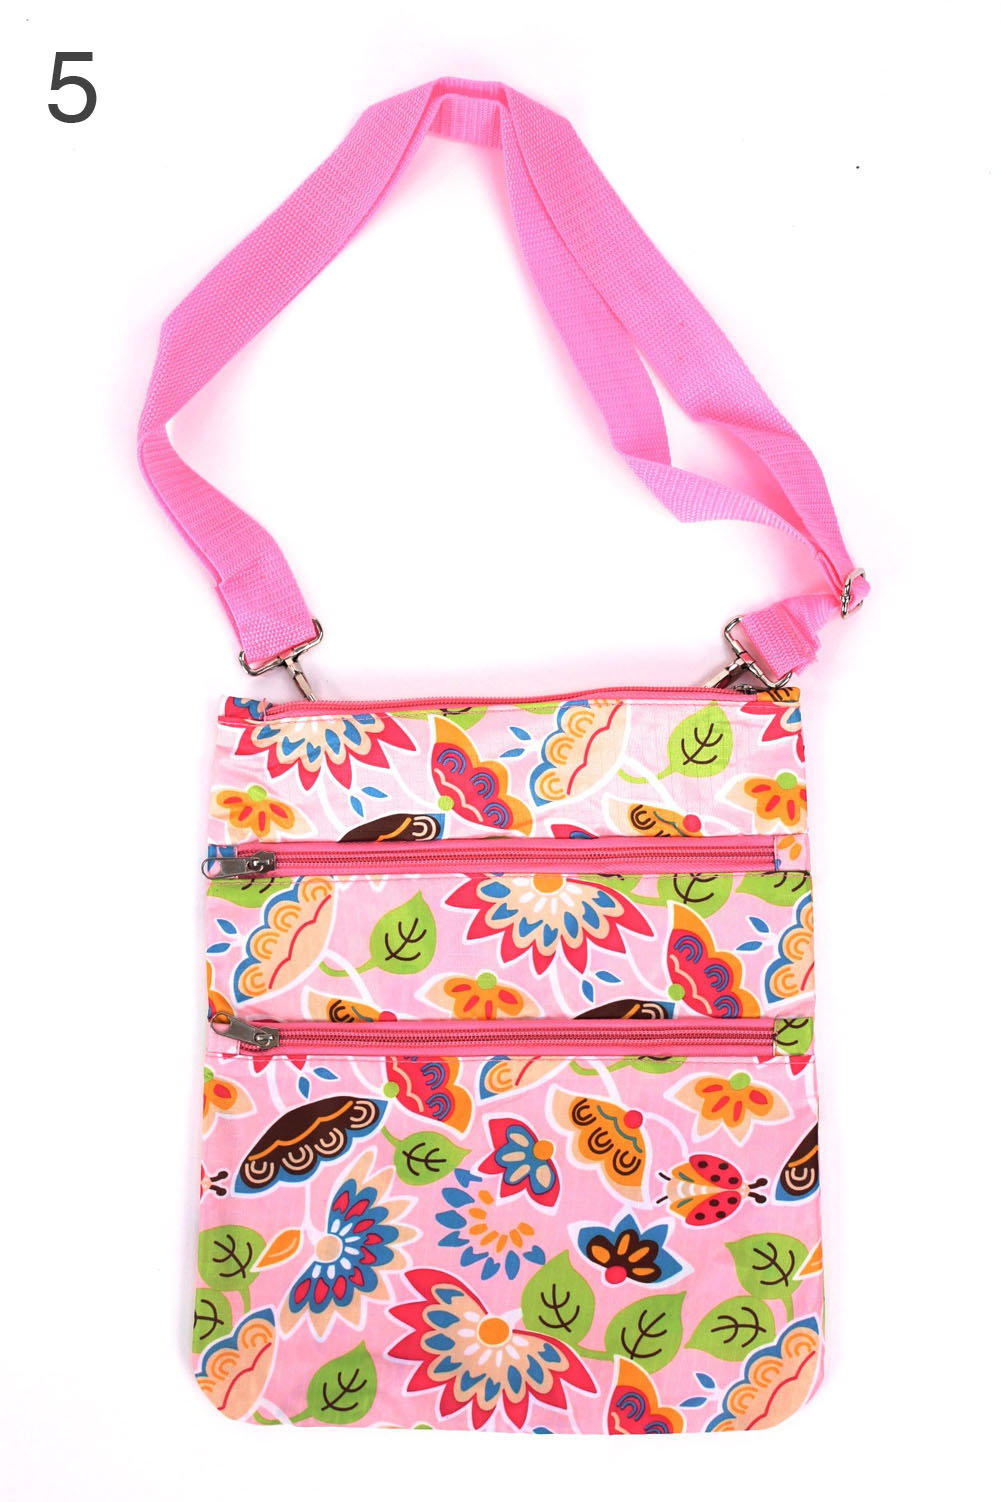 Messenger Bag Satchel All Over Print Pattern Fashion Shoulder Purse Cross Body | eBay